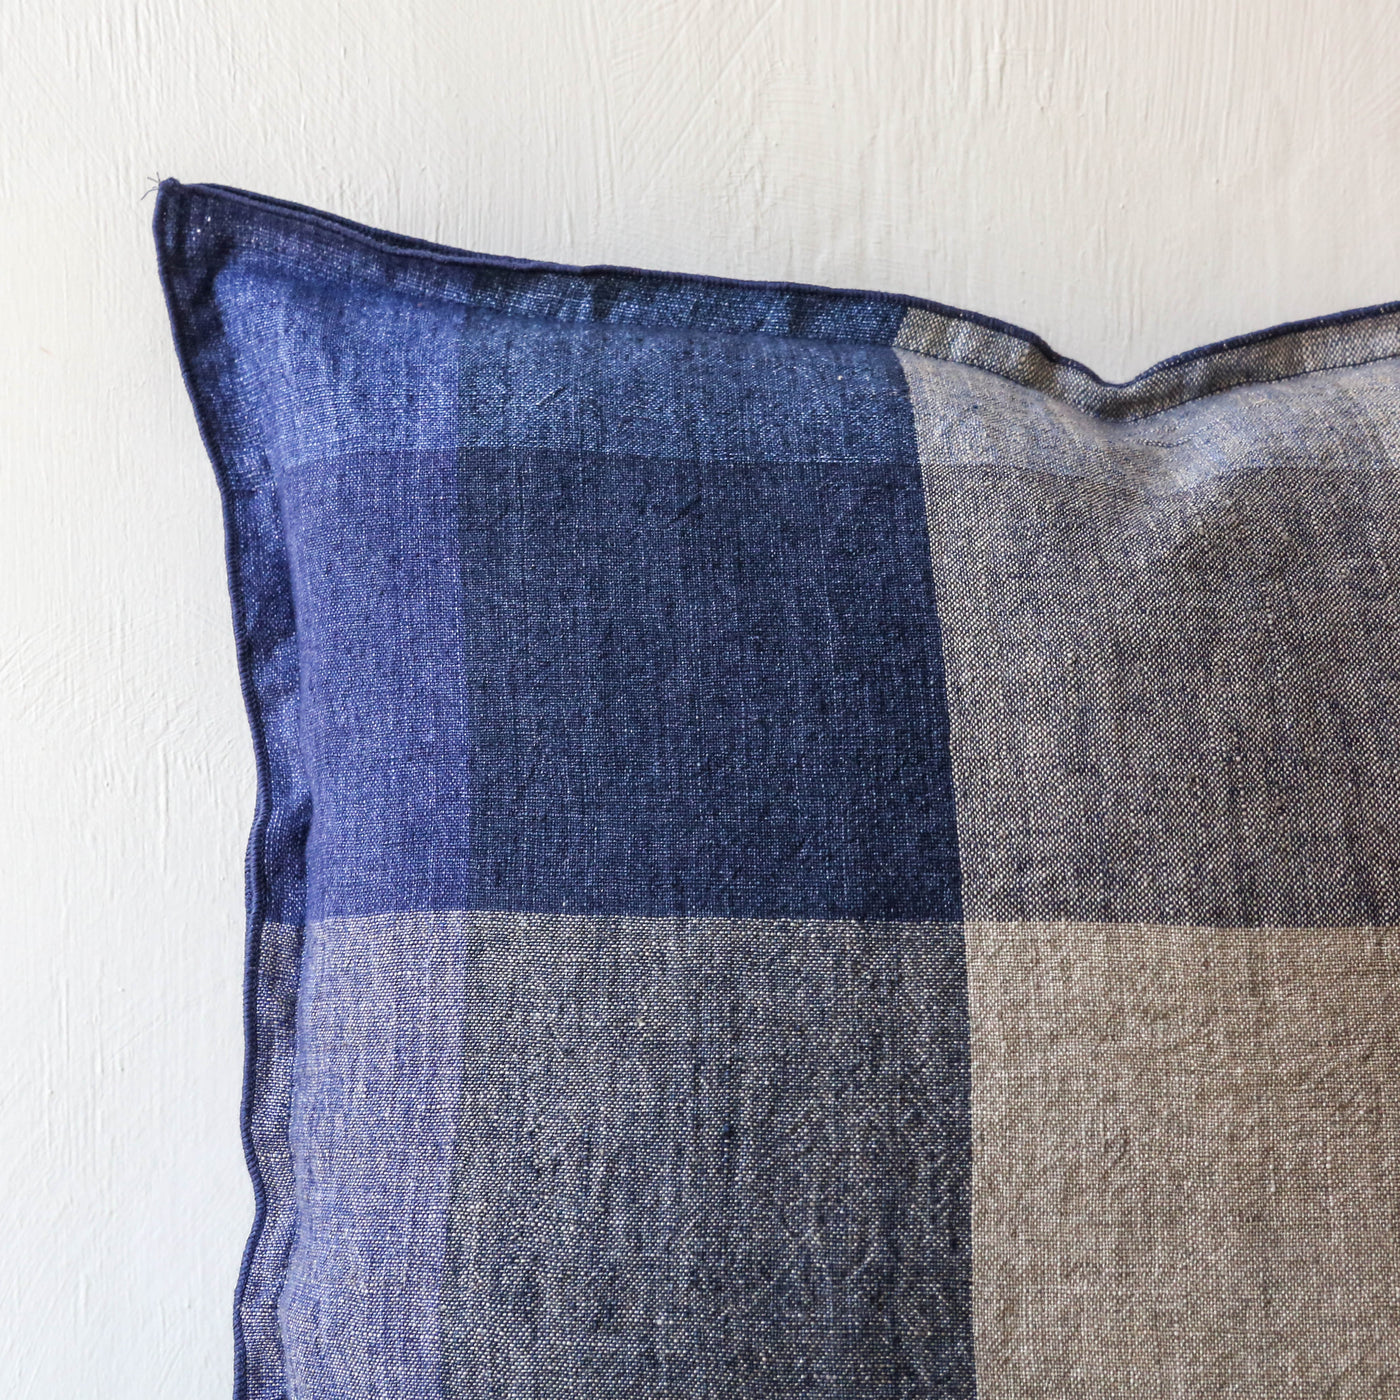 Linen Check Cushion Cover - Denim 50cm